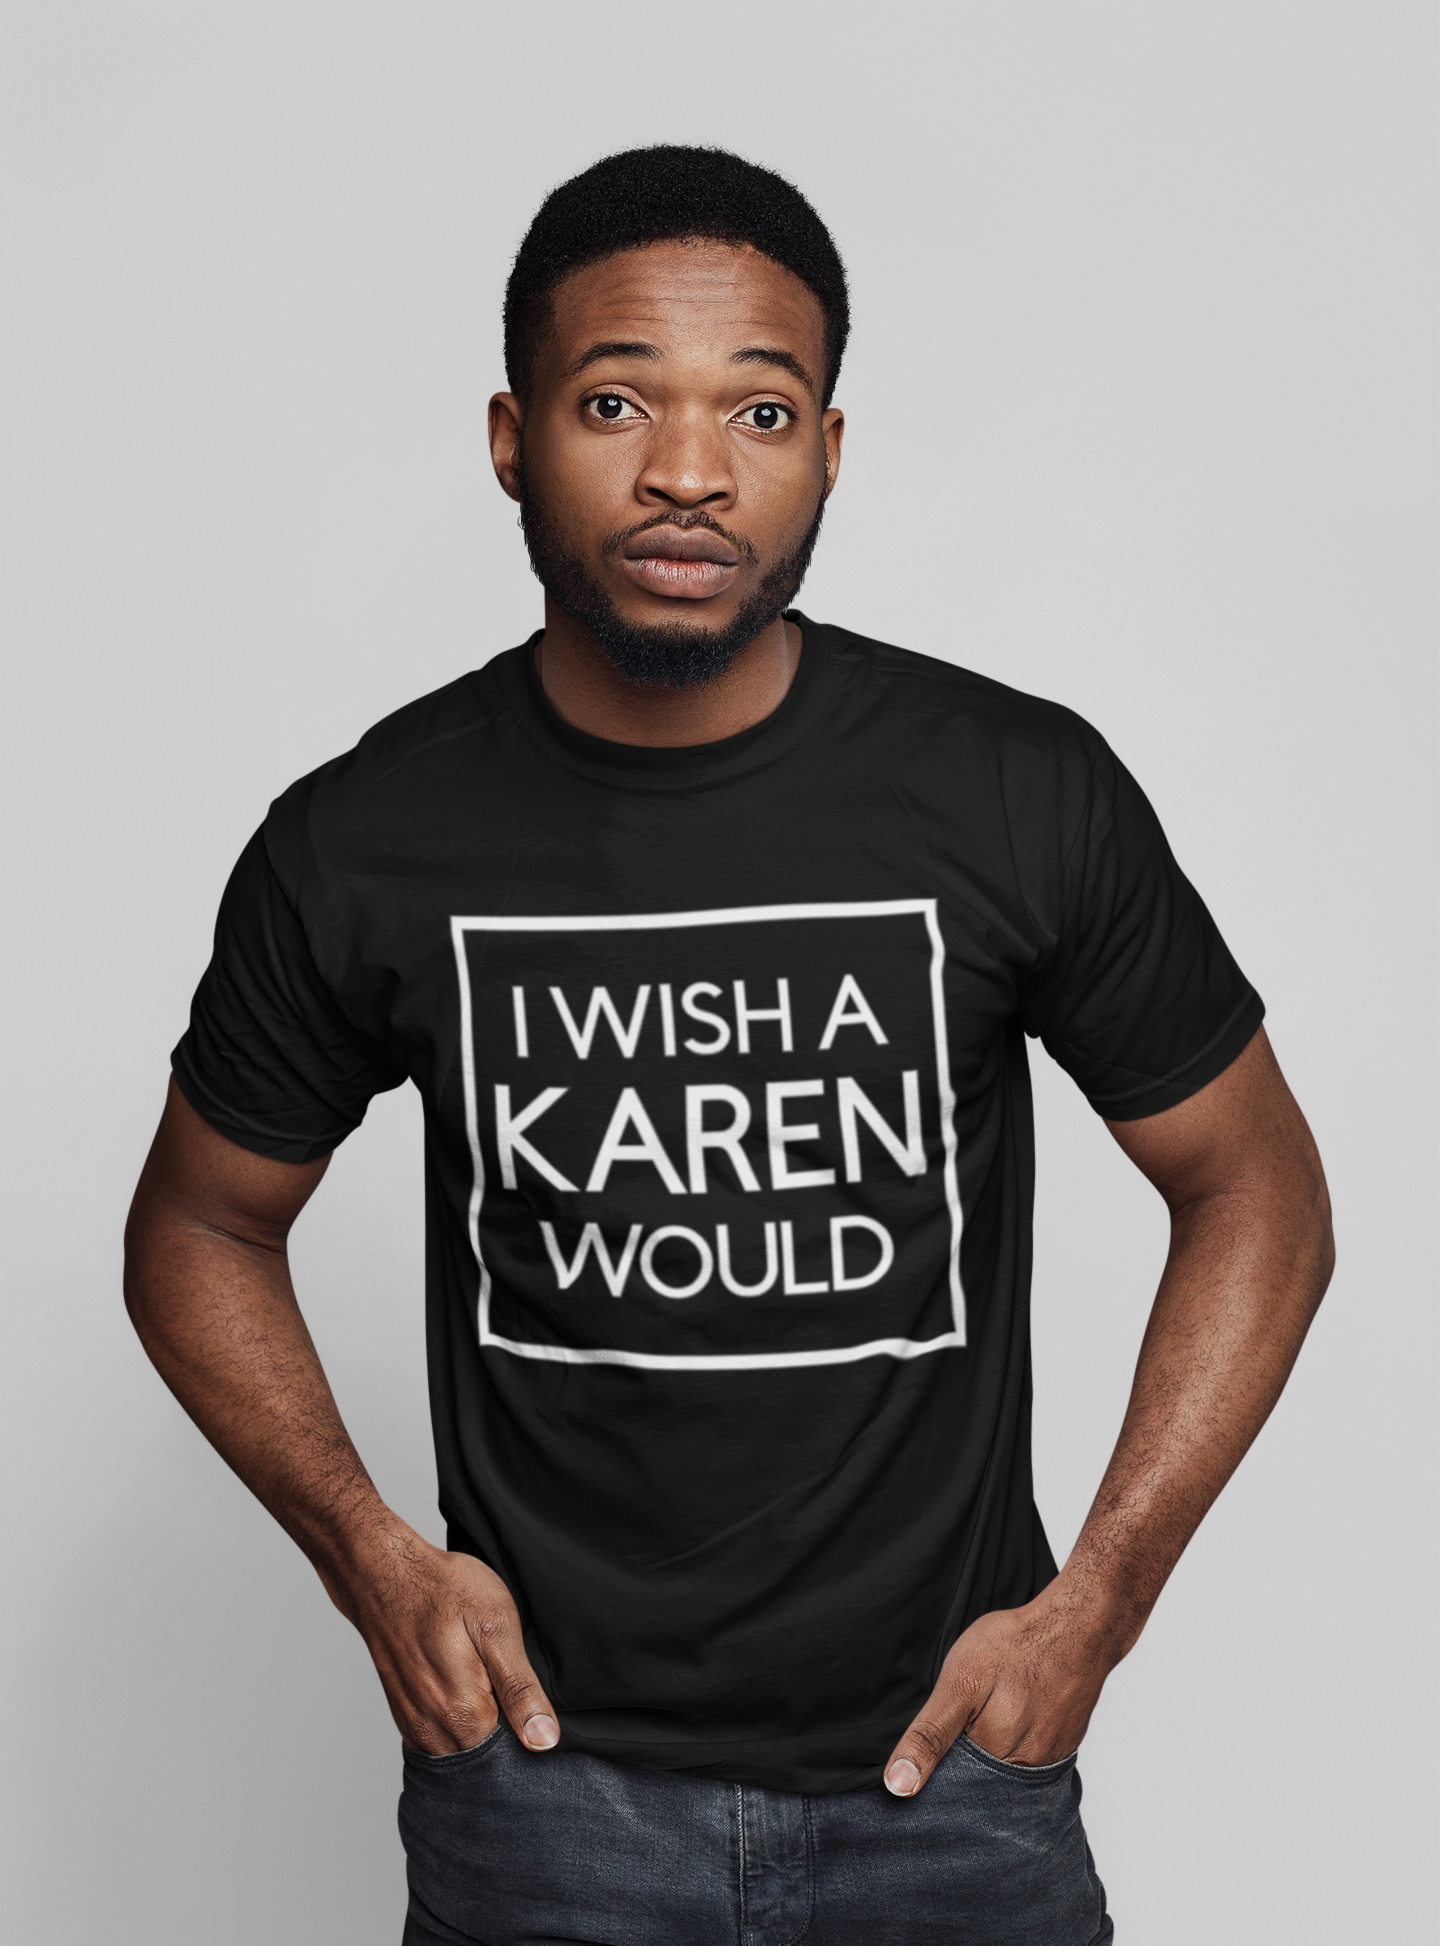 I Wish A Karen Would!